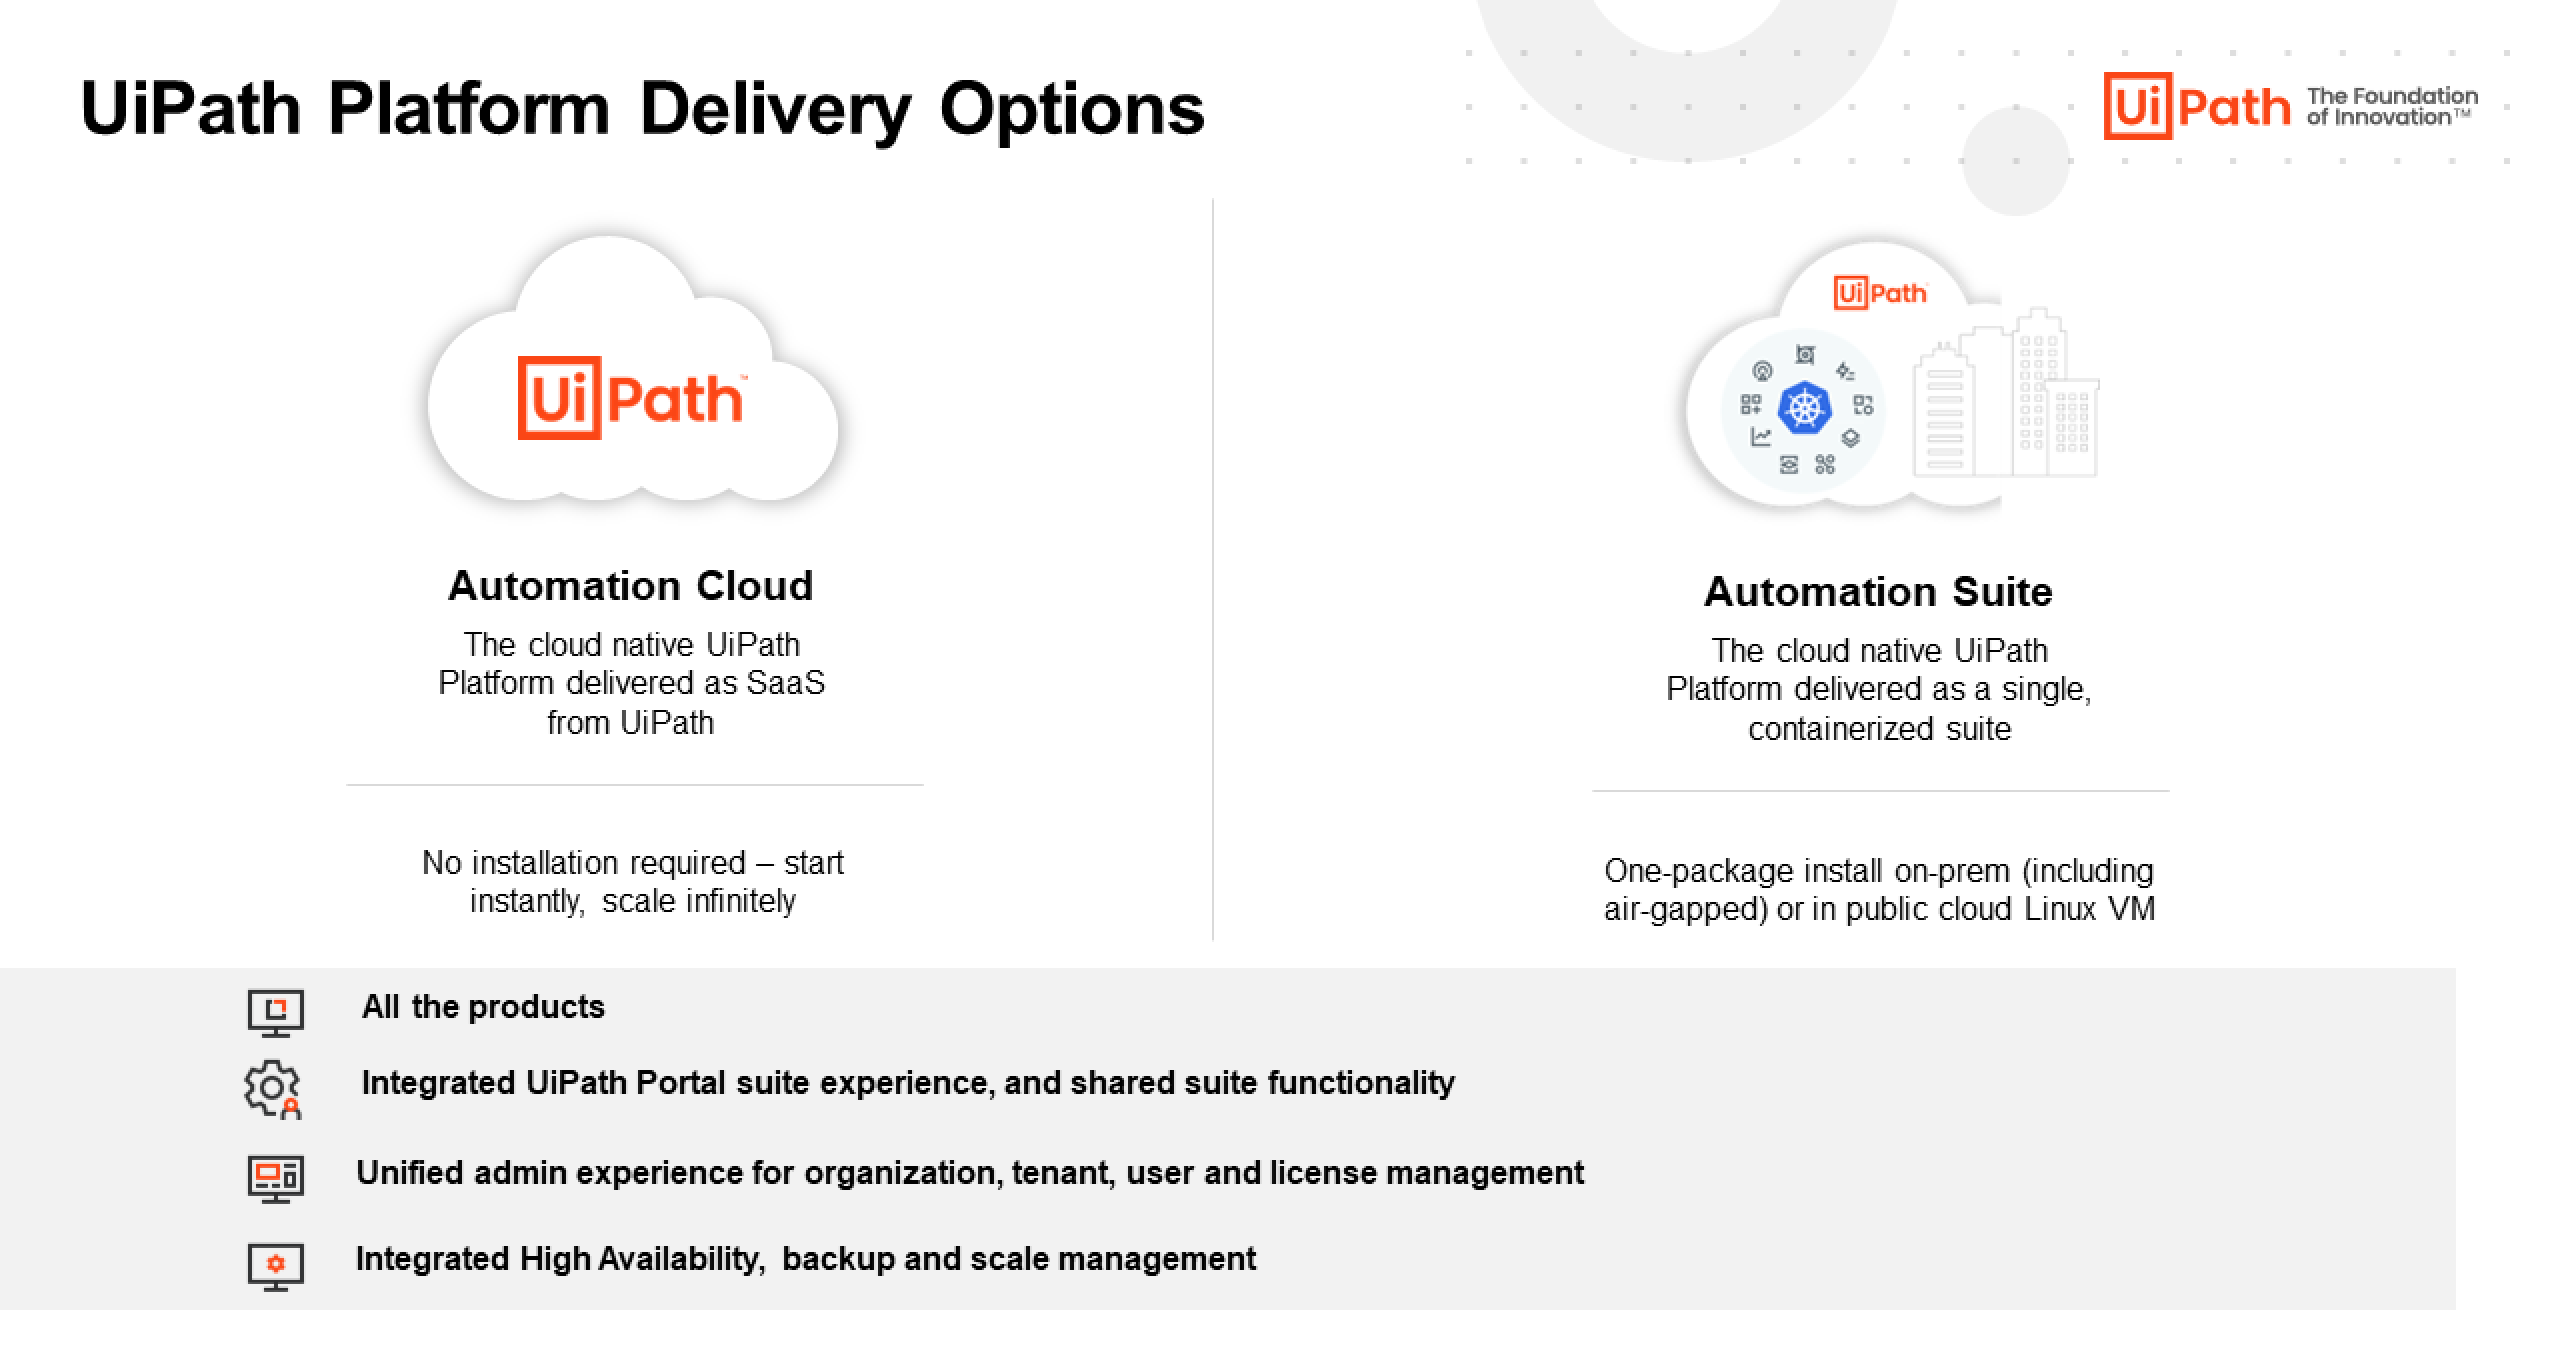 UiPath Platform Delivery Options